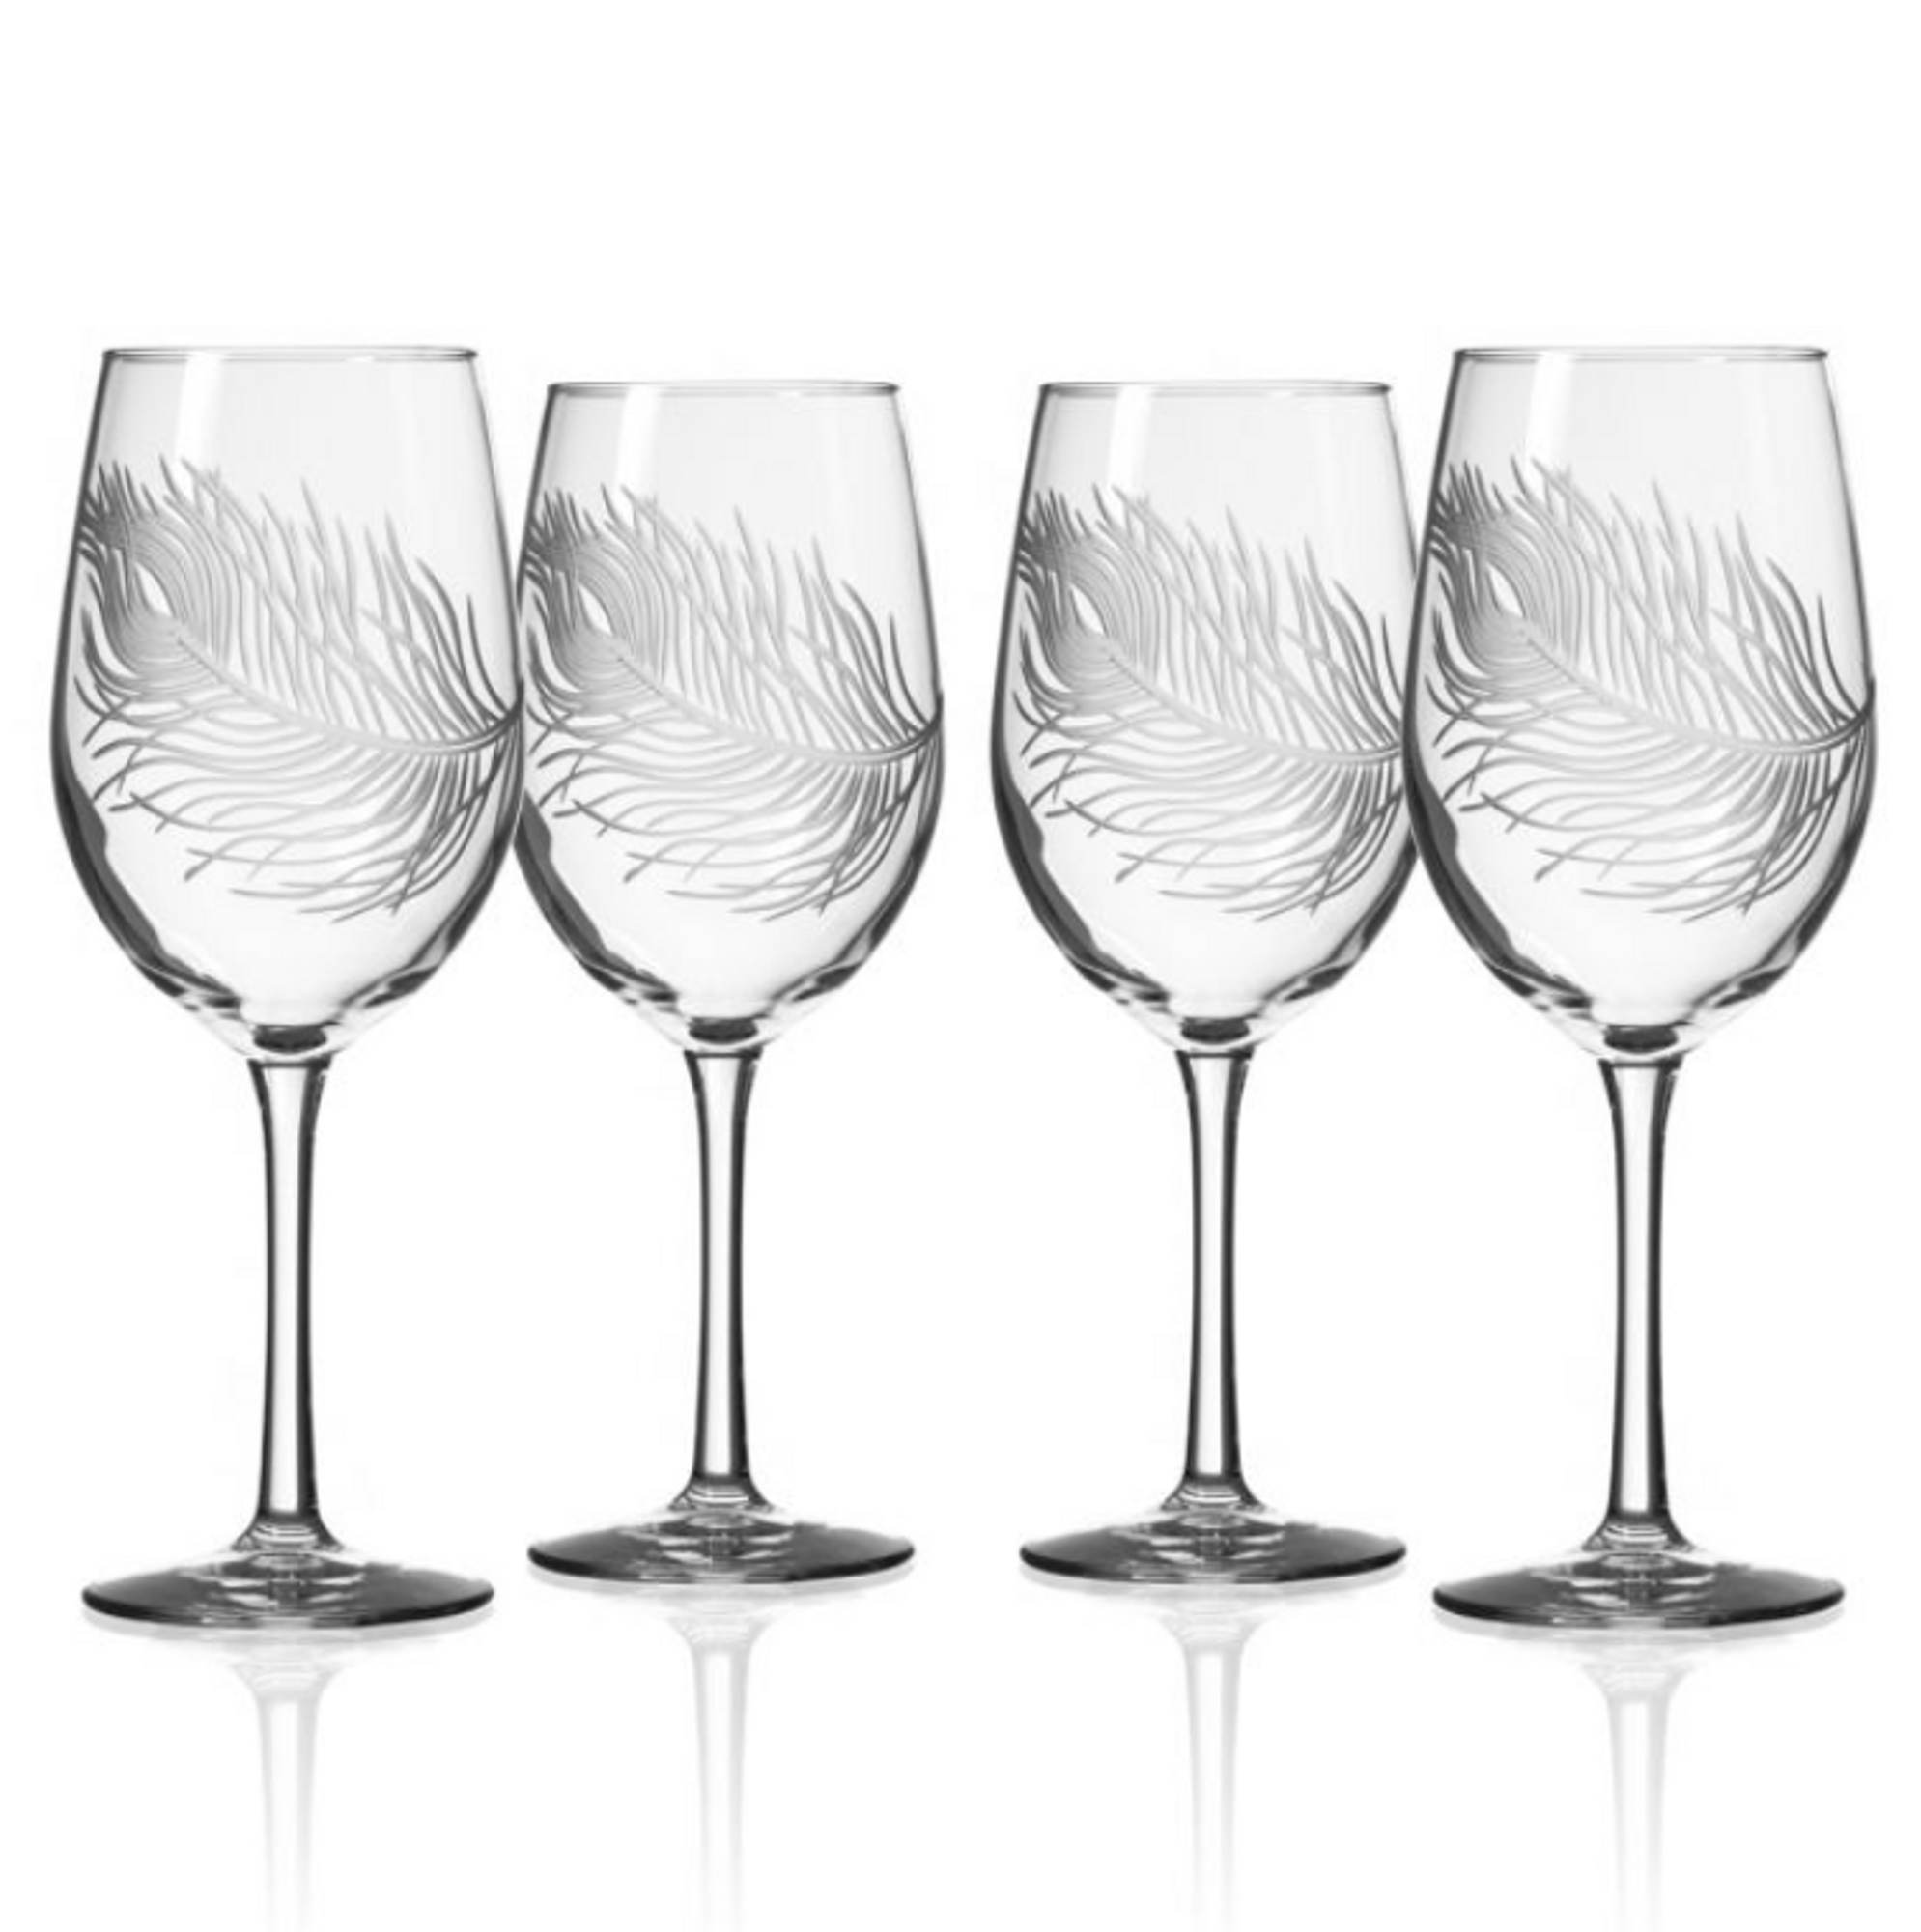 Rolf Glass Icy Pine White Wine 12oz - Set of 4 Glasses